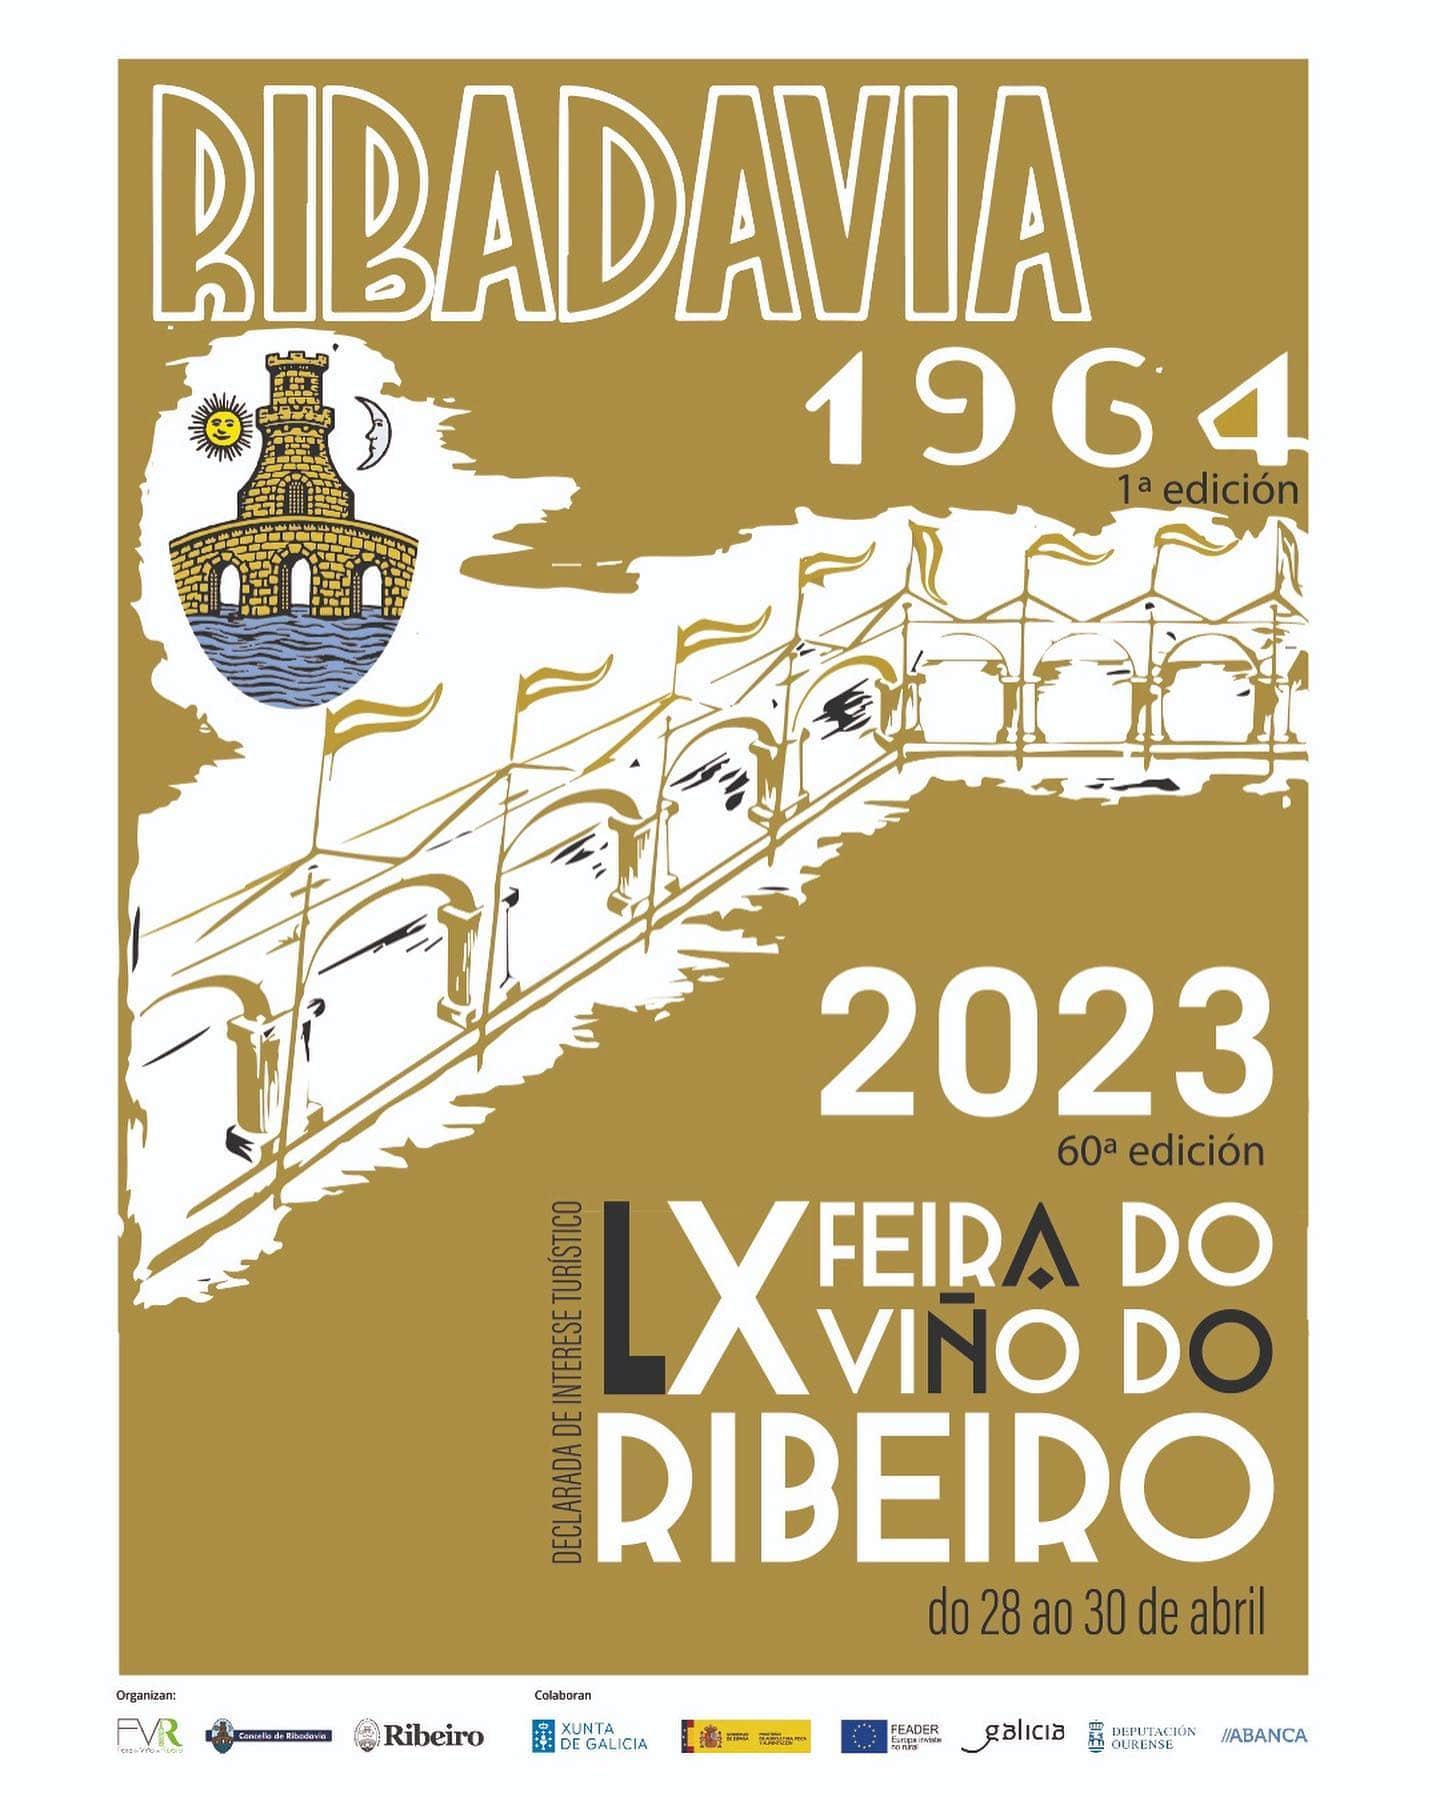 La Feira do Viño do Ribeiro Plakat von 2023